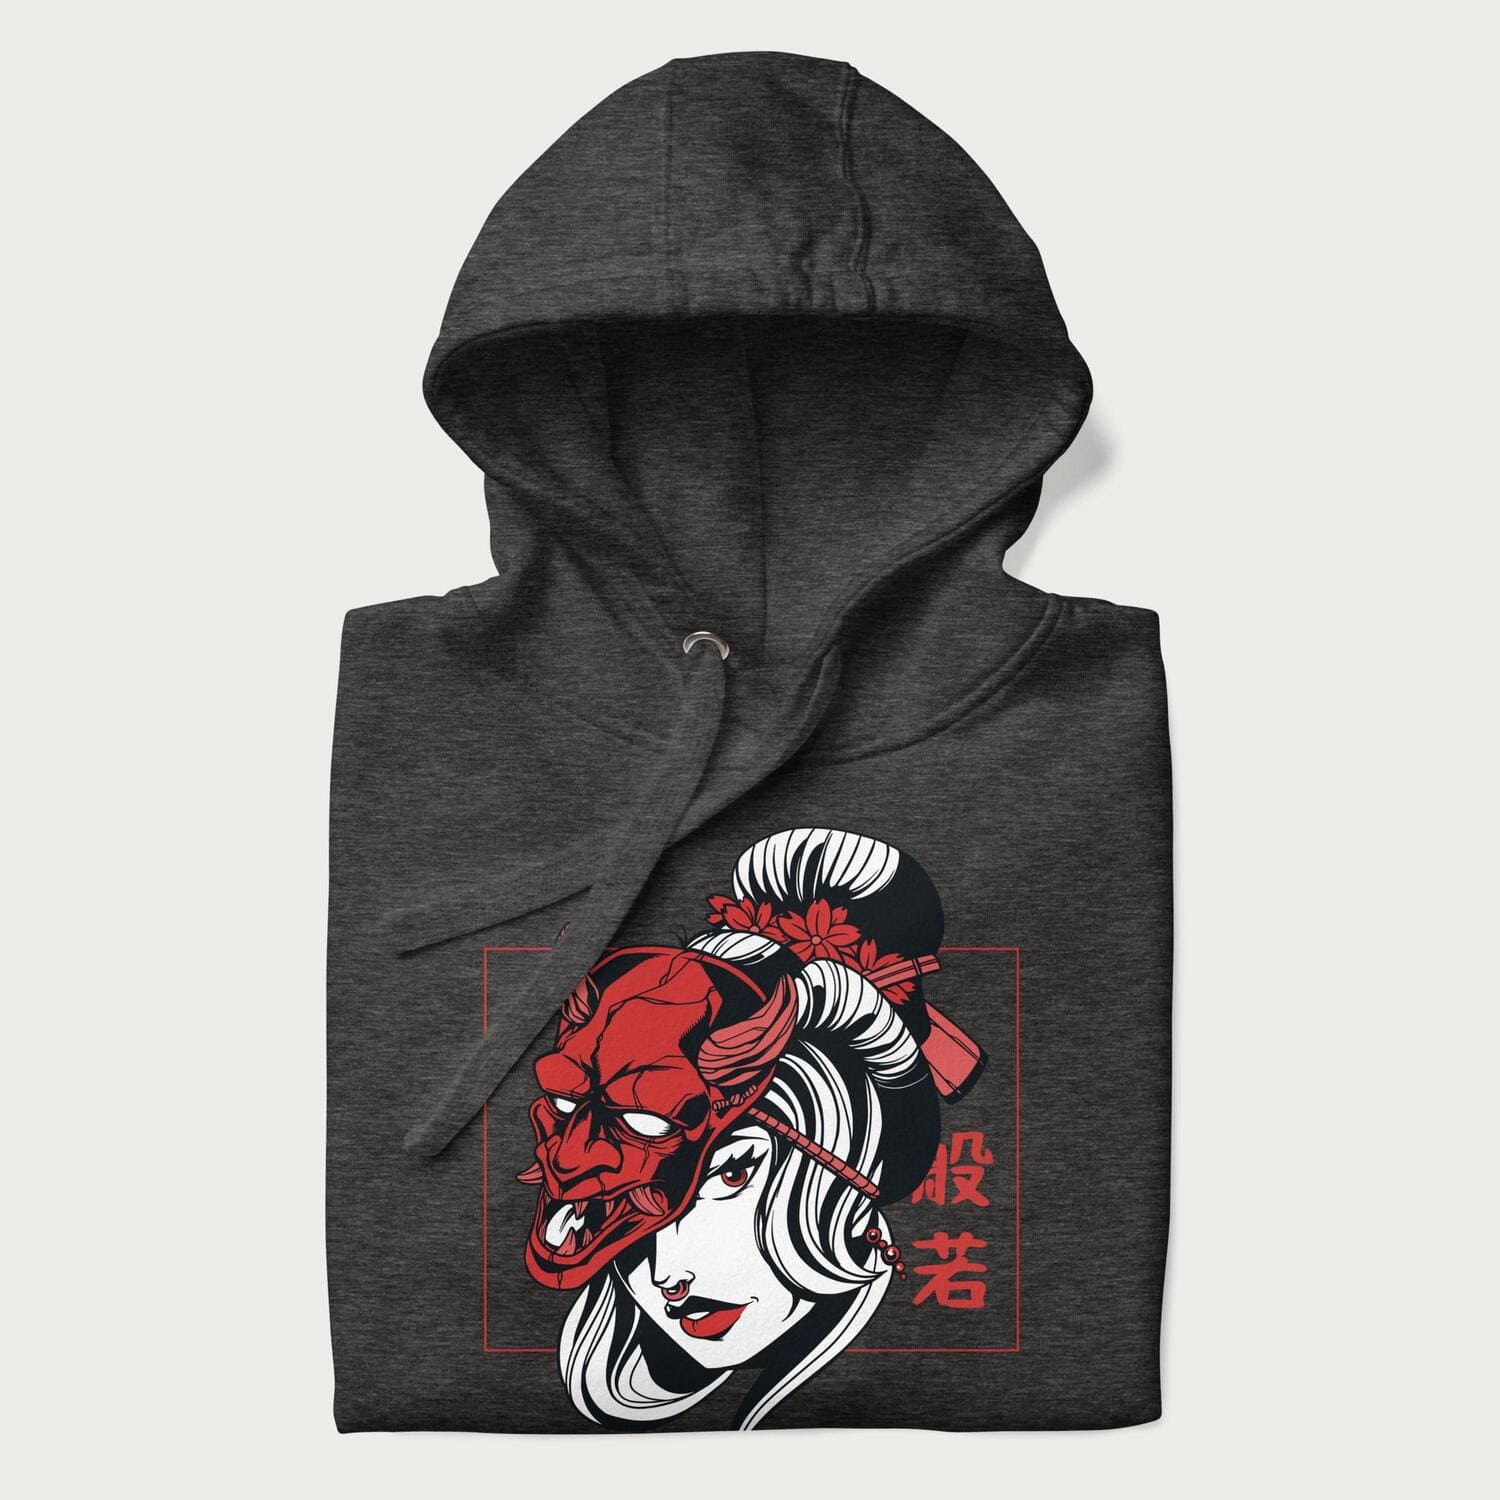 Folded dark grey hoodie with a japanese geisha and hannya mask graphic.